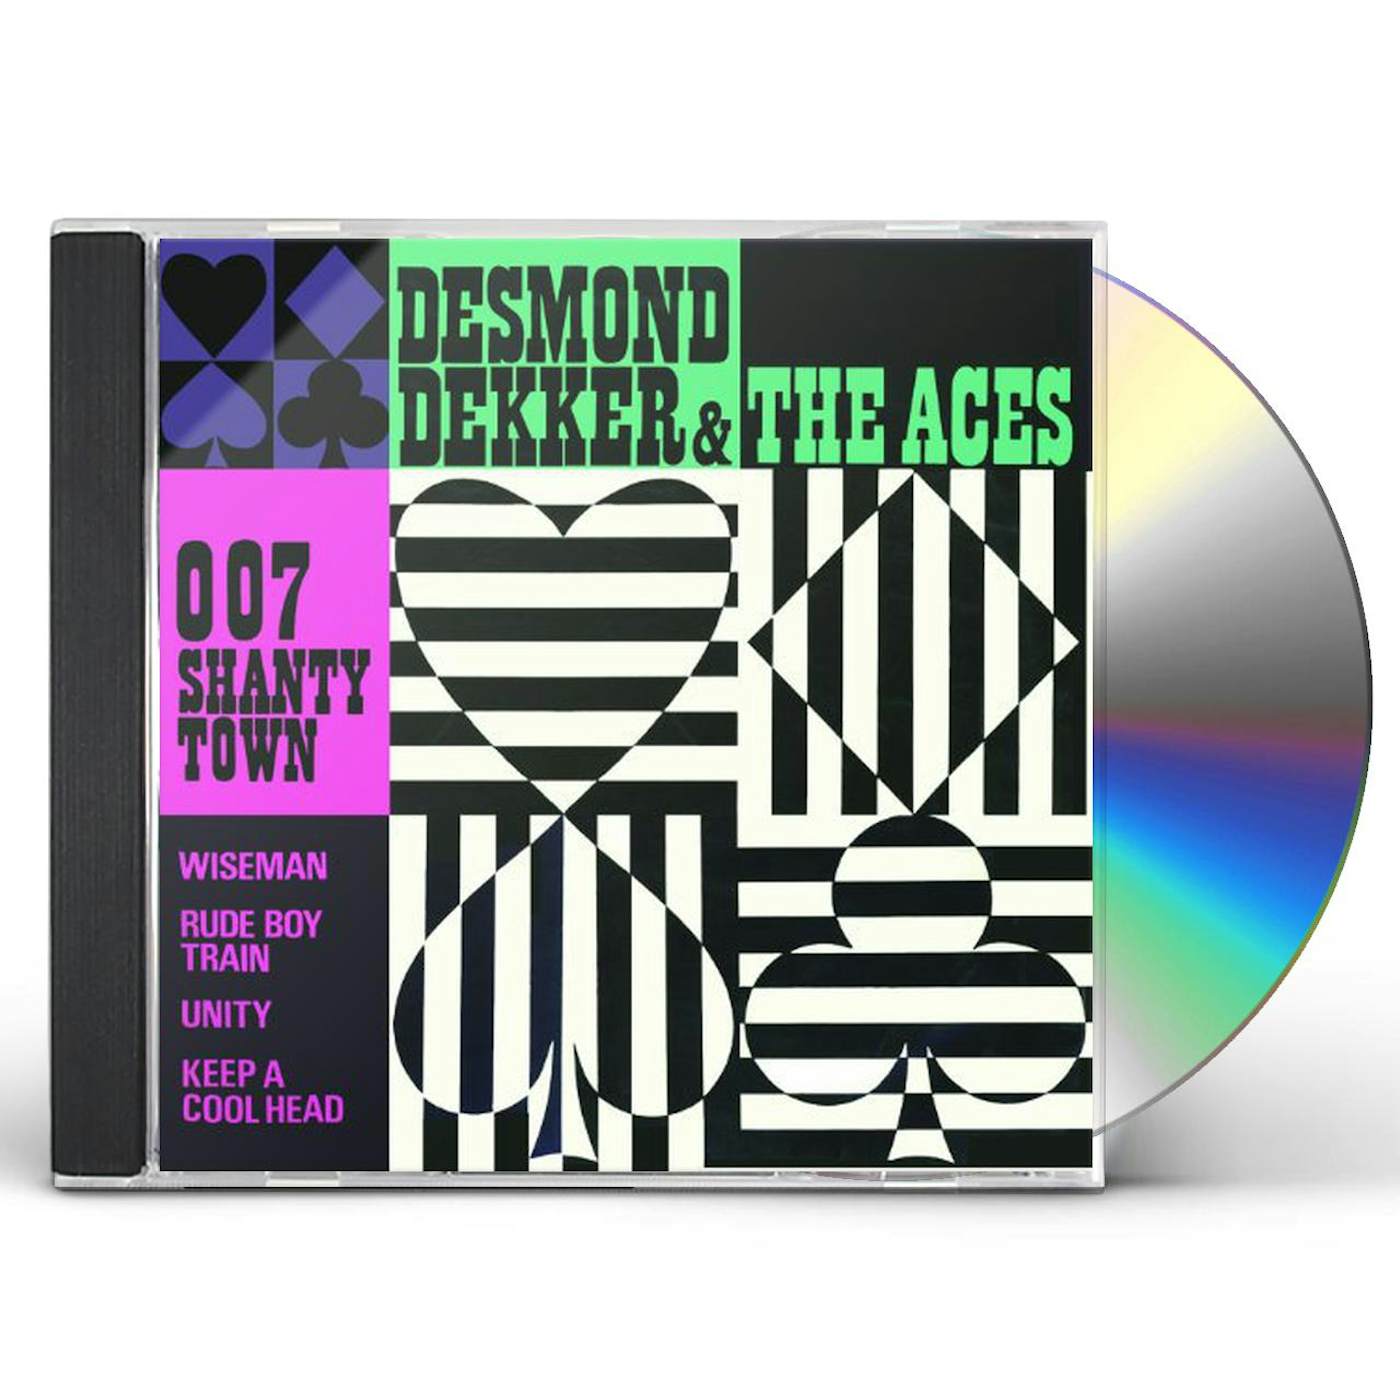 Desmond Dekker & The Aces 0.0.7 SHANTY TOWN CD